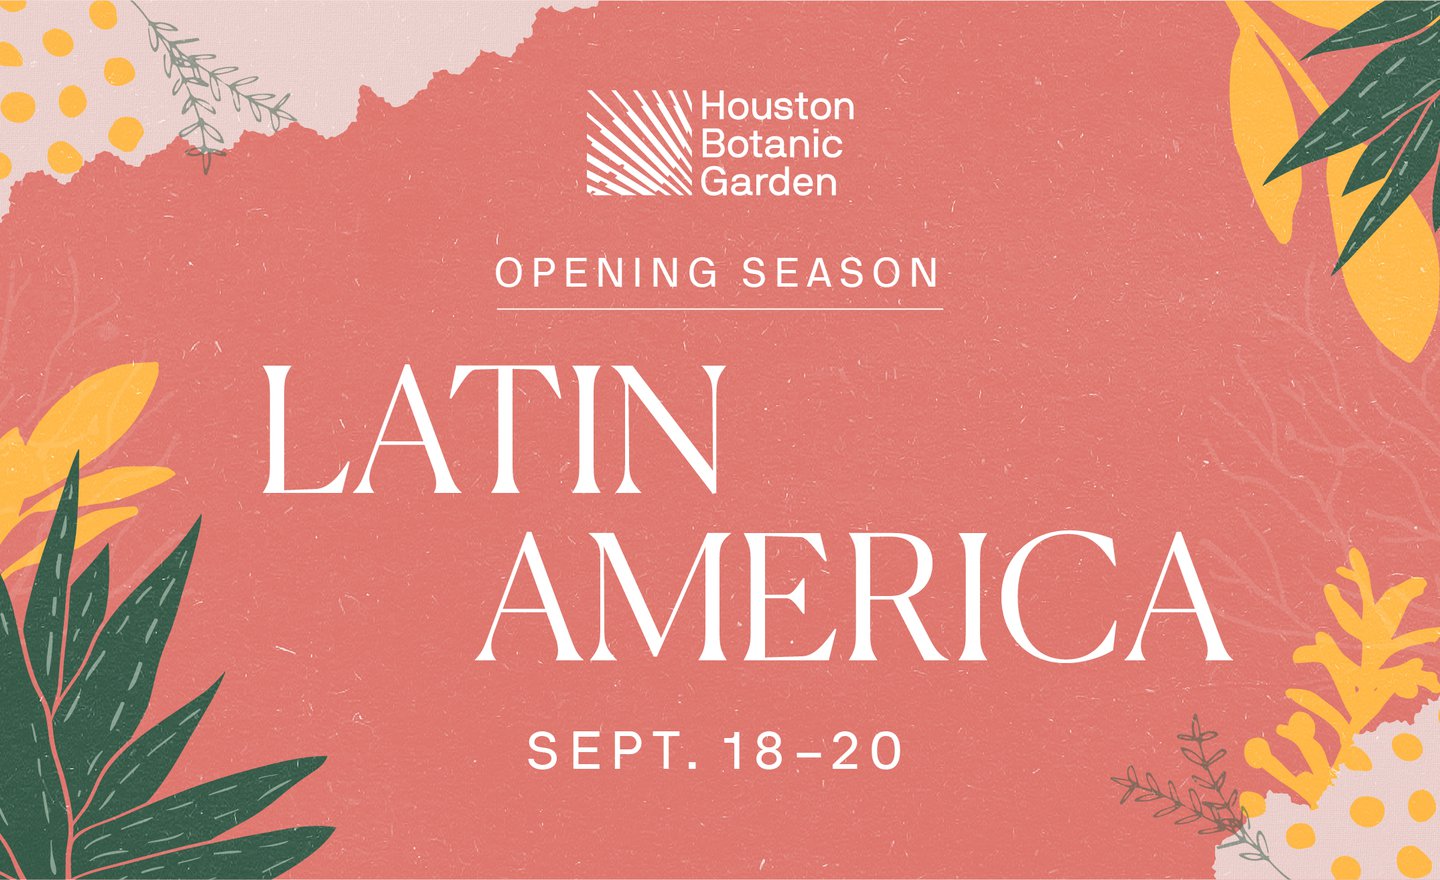 hbg_opening_season_event_design_1200x630_latin_america